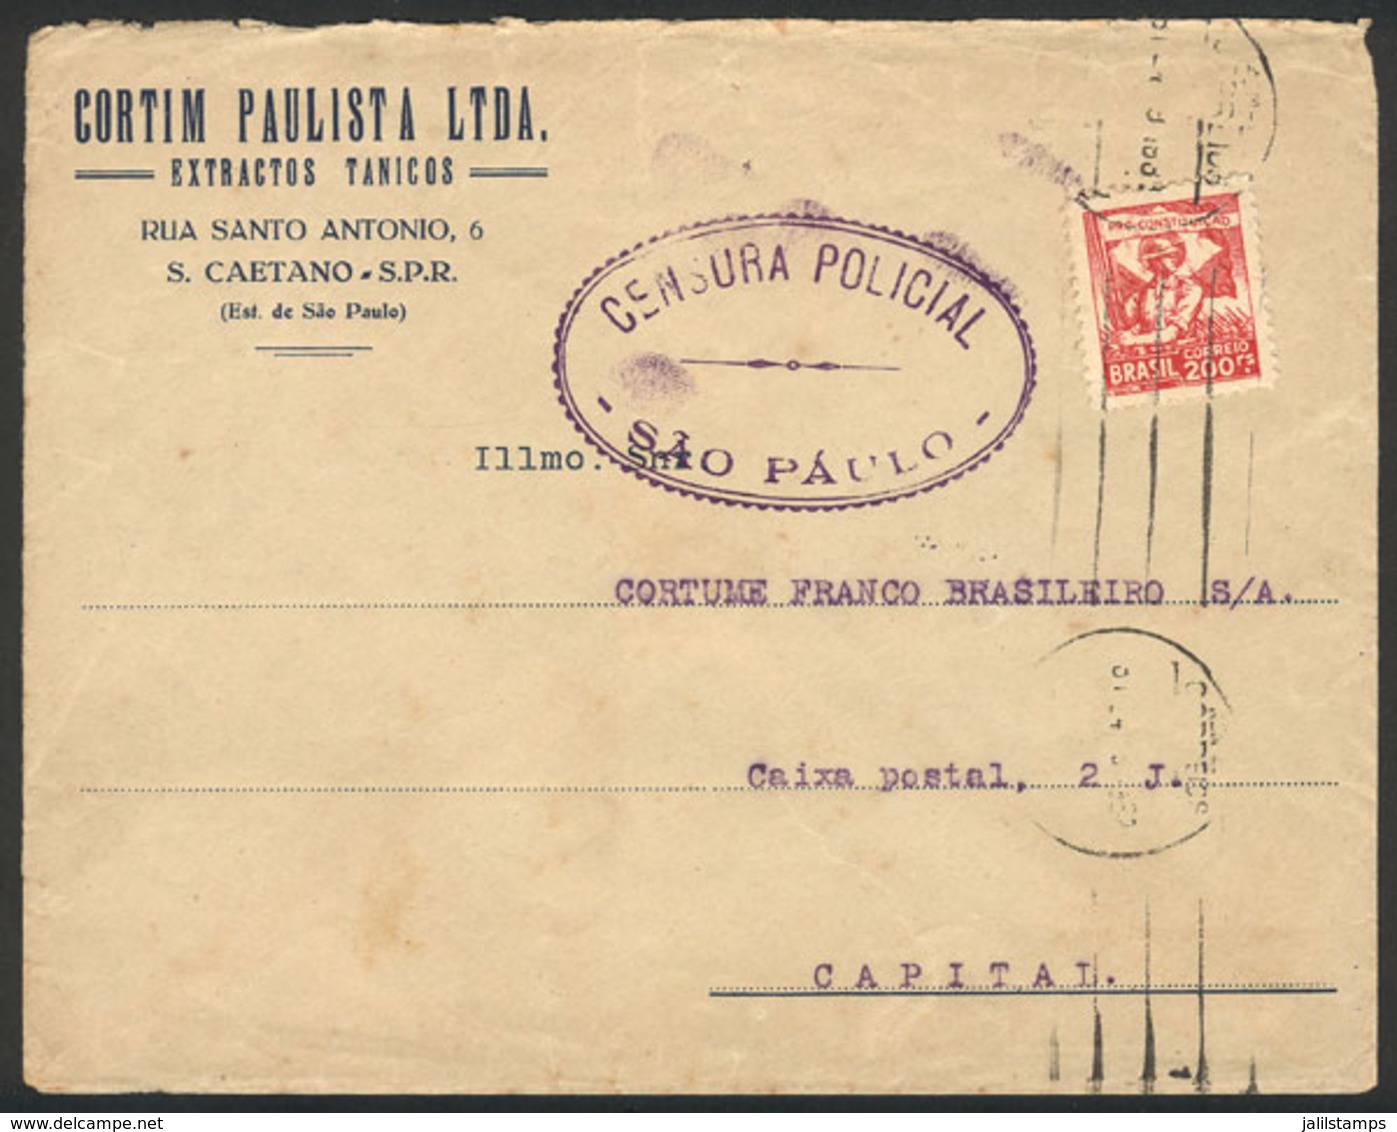 BRAZIL: Cover Sent From S.Caetano To Rio On 24/SE/1932, Franked By RHM.C-47 ALONE, Marked "CENSURA POLICIAL - SAO PAULO" - Préphilatélie